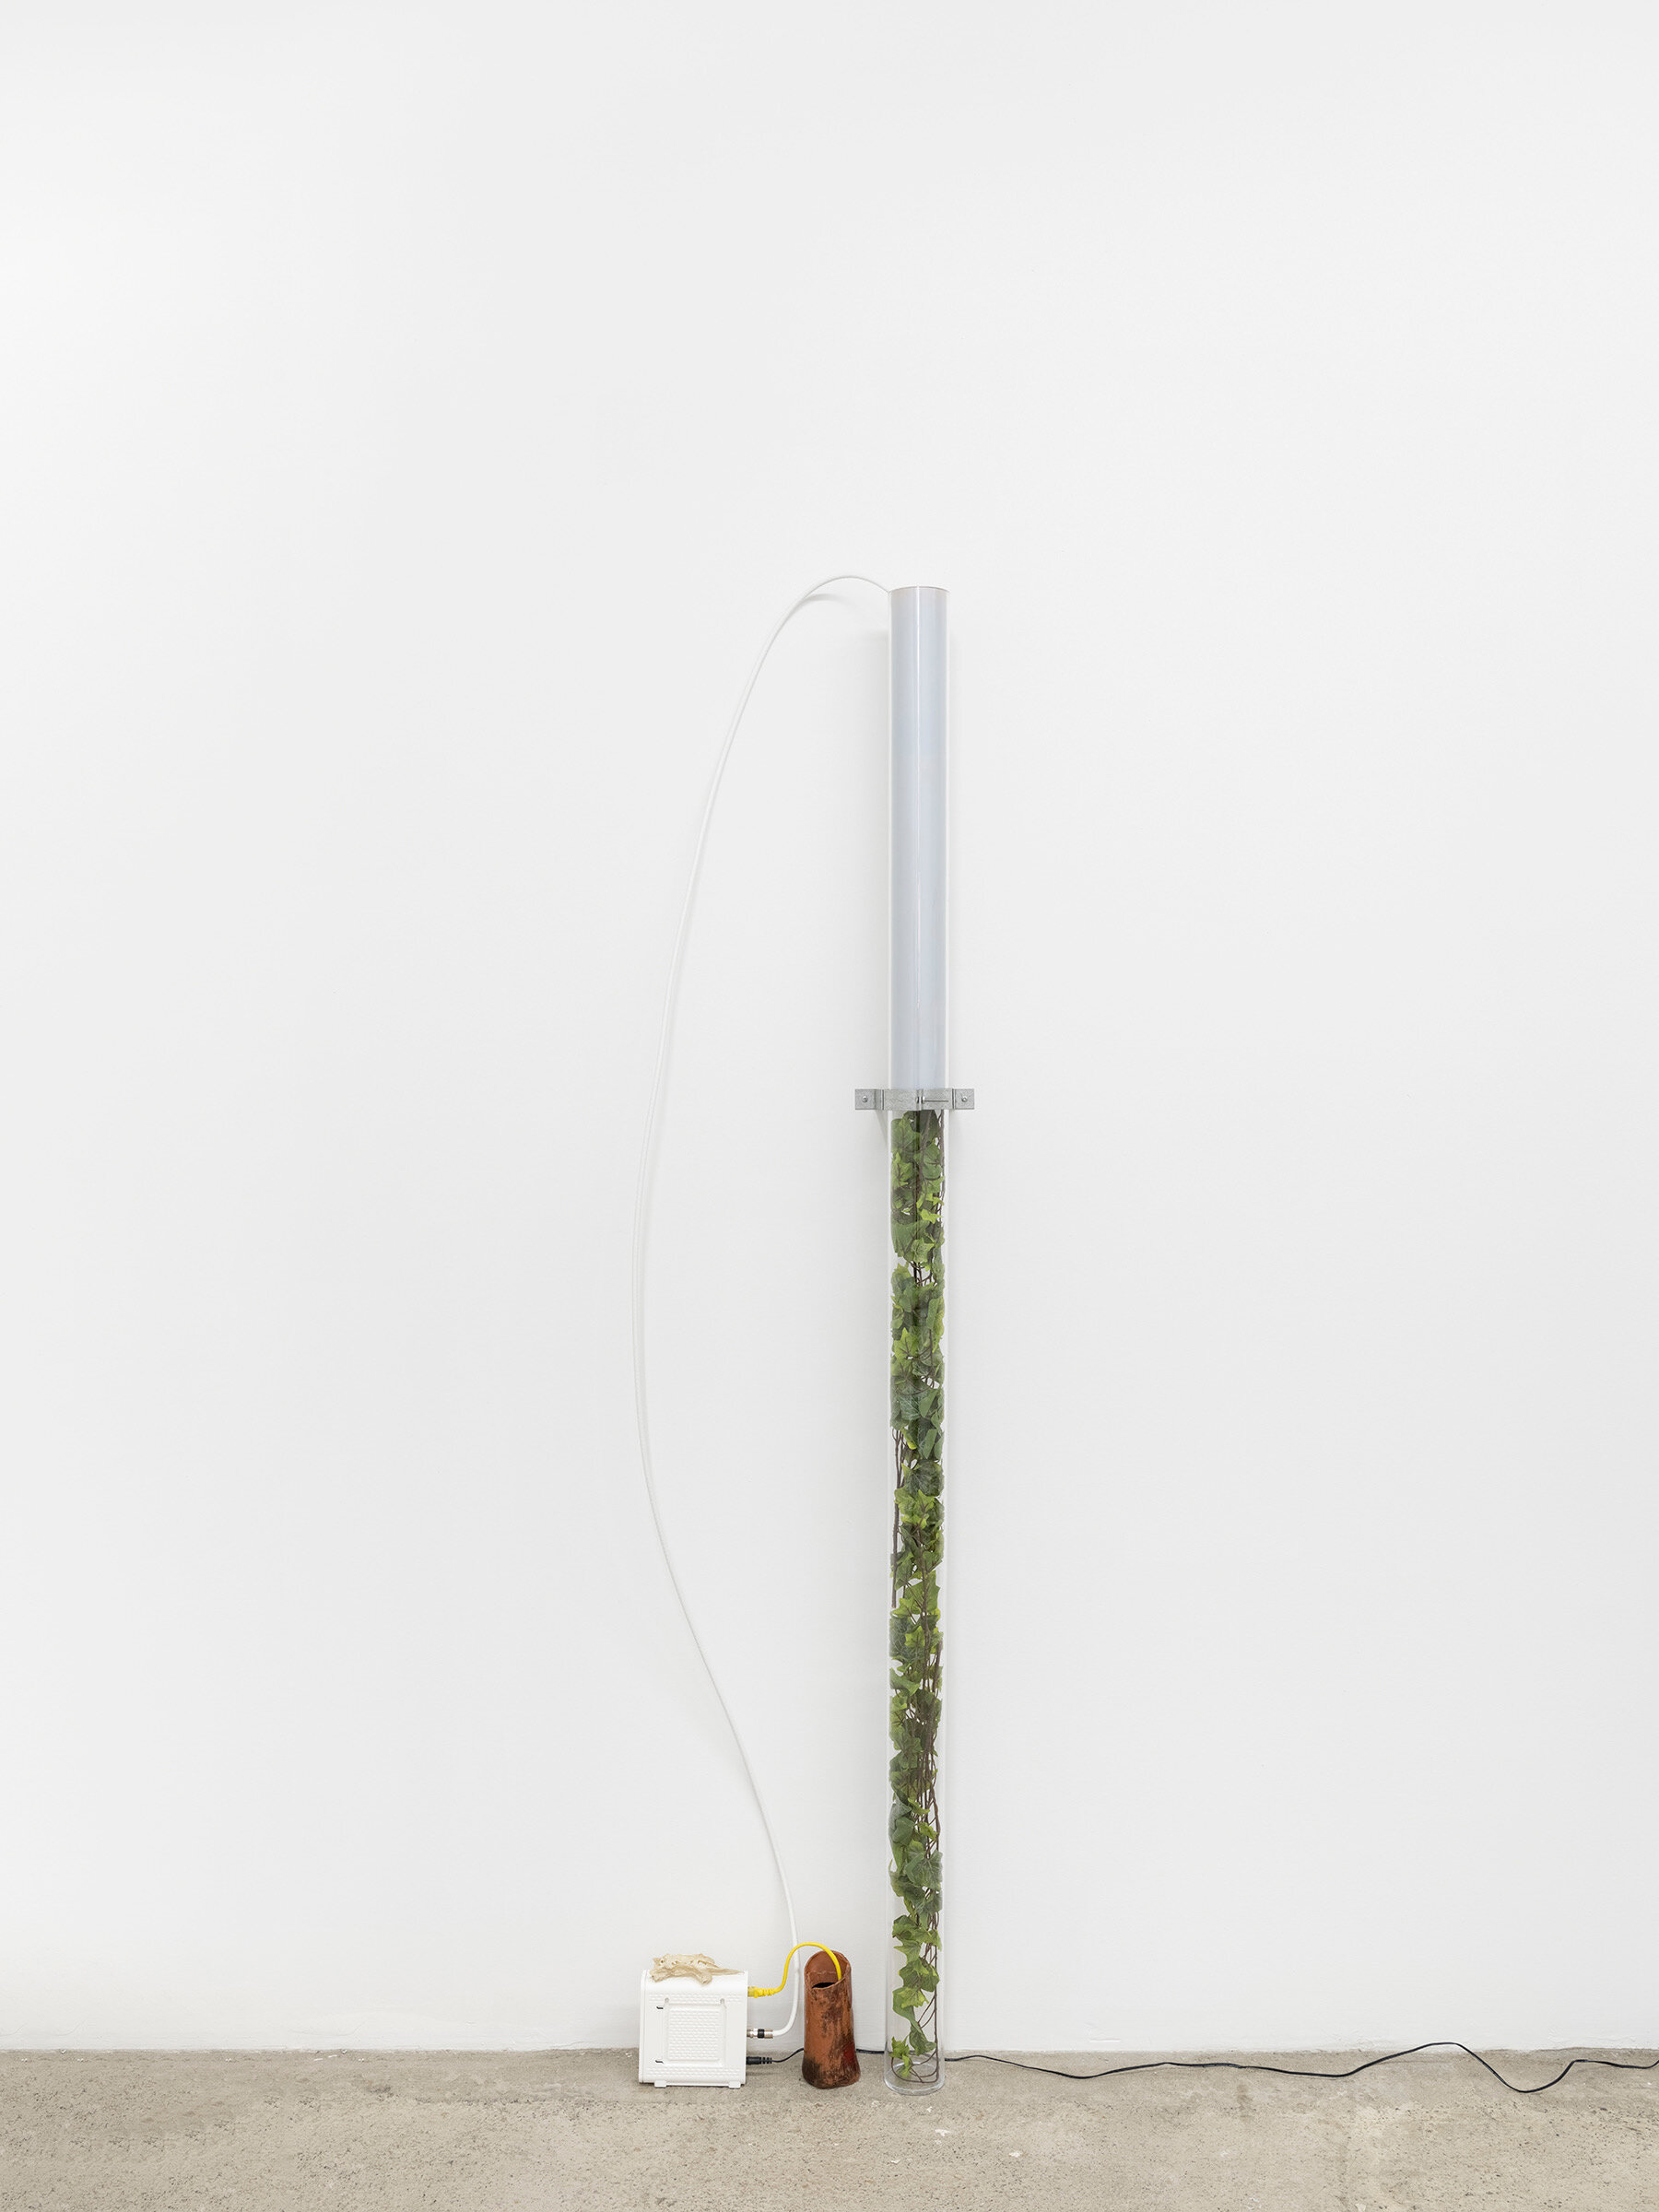  Connor McNicholas  Phase Transition,  2020 Plexiglass, unprocessed photographic paper, artificial ivy,  ceramic, water, endoskeleton, modem, cables, hardware 72x10 inches (183x25cm) 